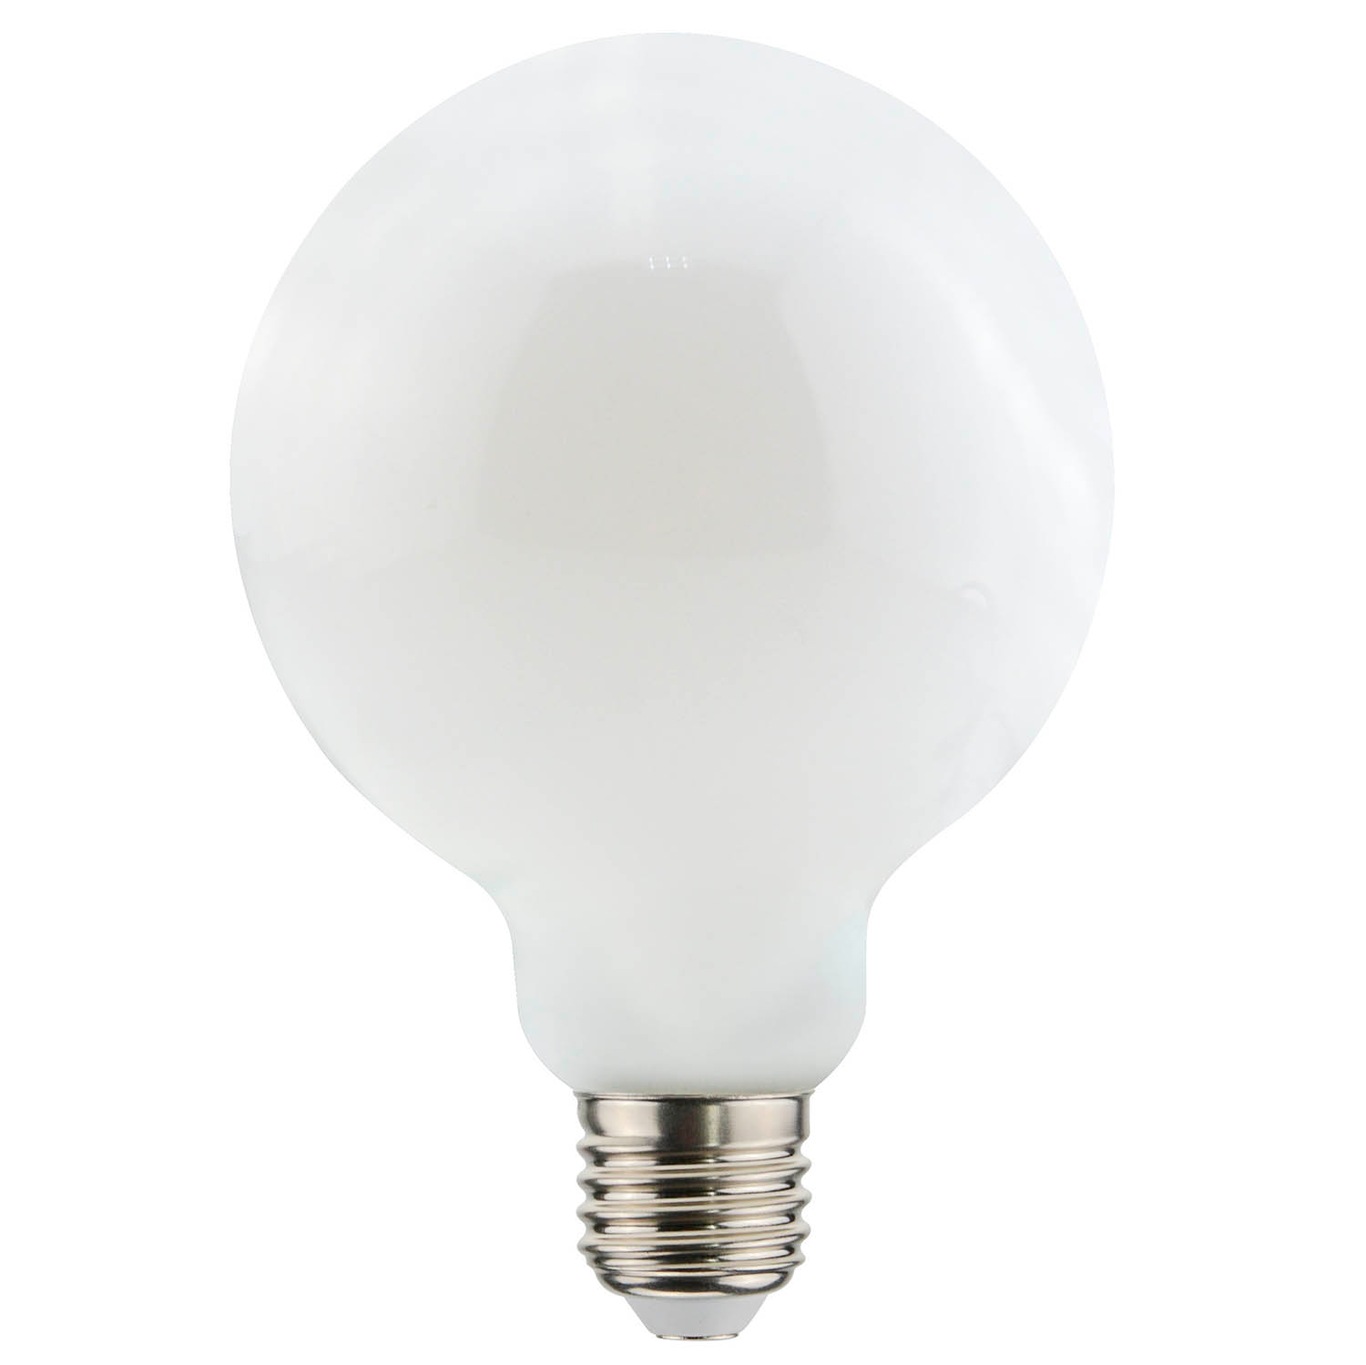 Warm White LED Bulb Light Lamp A60 E27 10W 806LM 3000K 